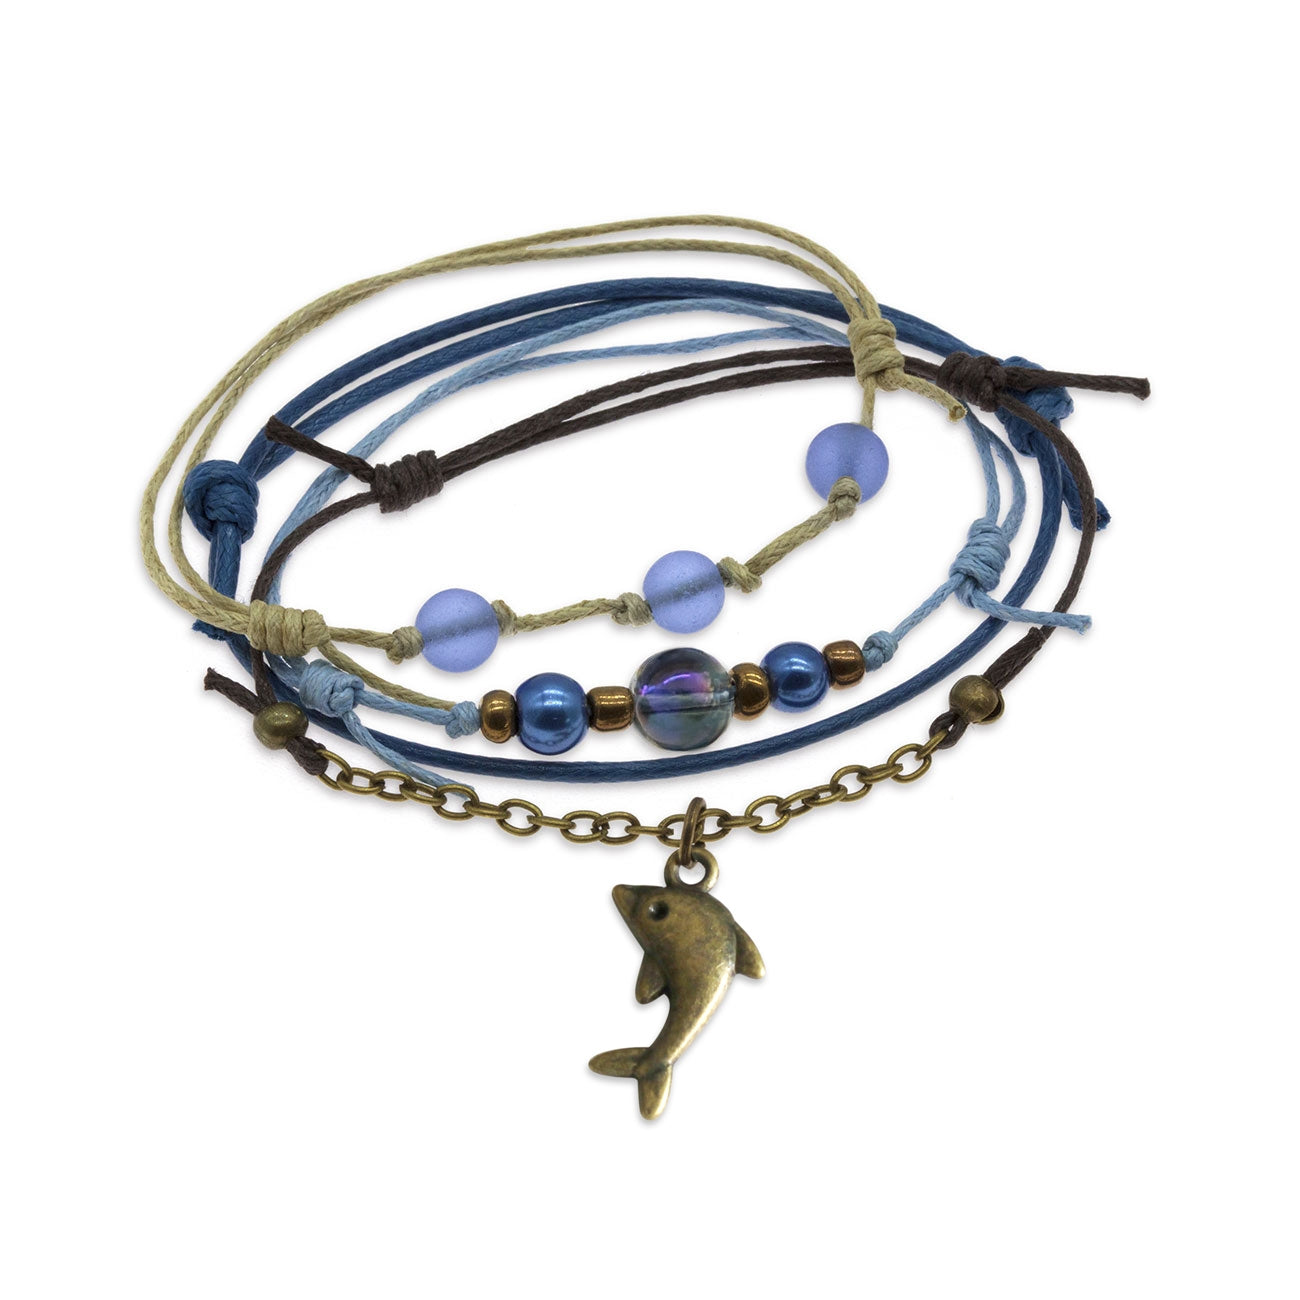 O Yeah Gifts Dolphin Bracelets, 4 Piece Charm Bracelet Pack